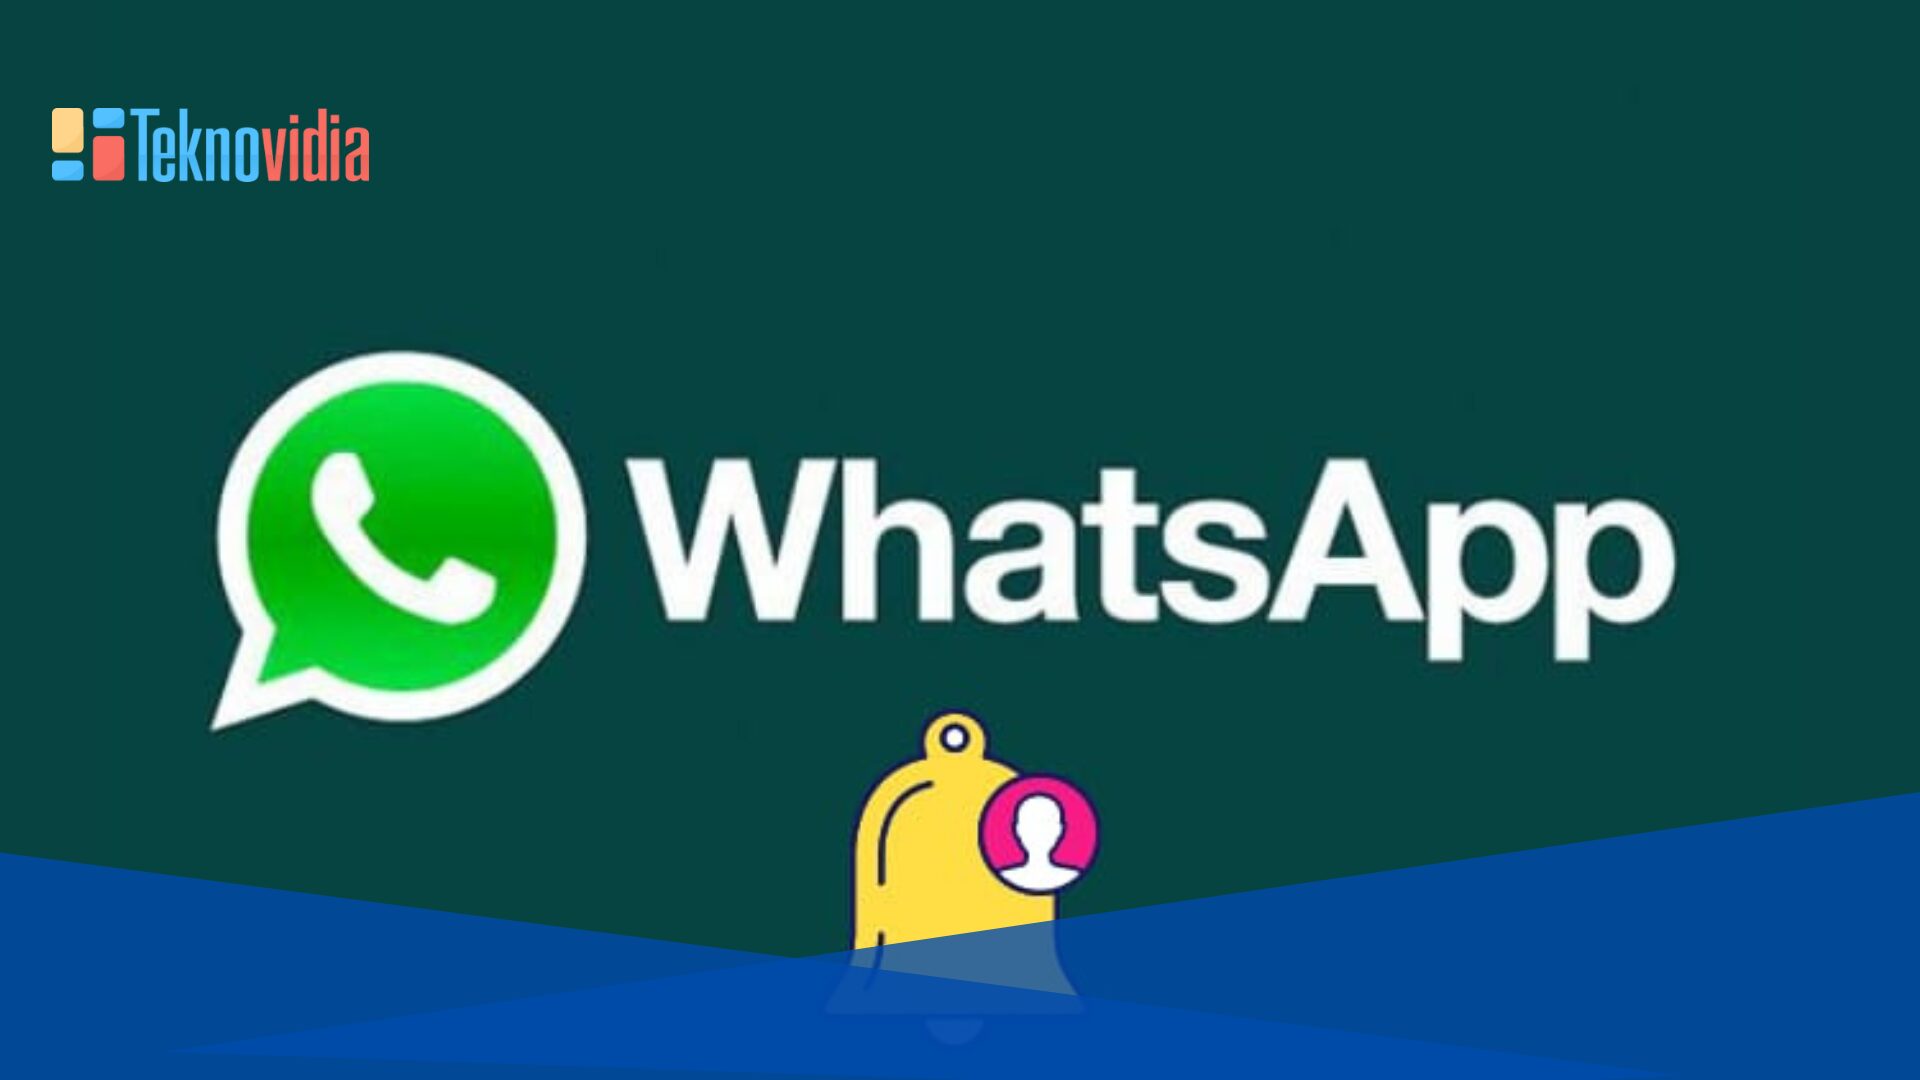 Cara Mengganti Nada Dering Whatsapp